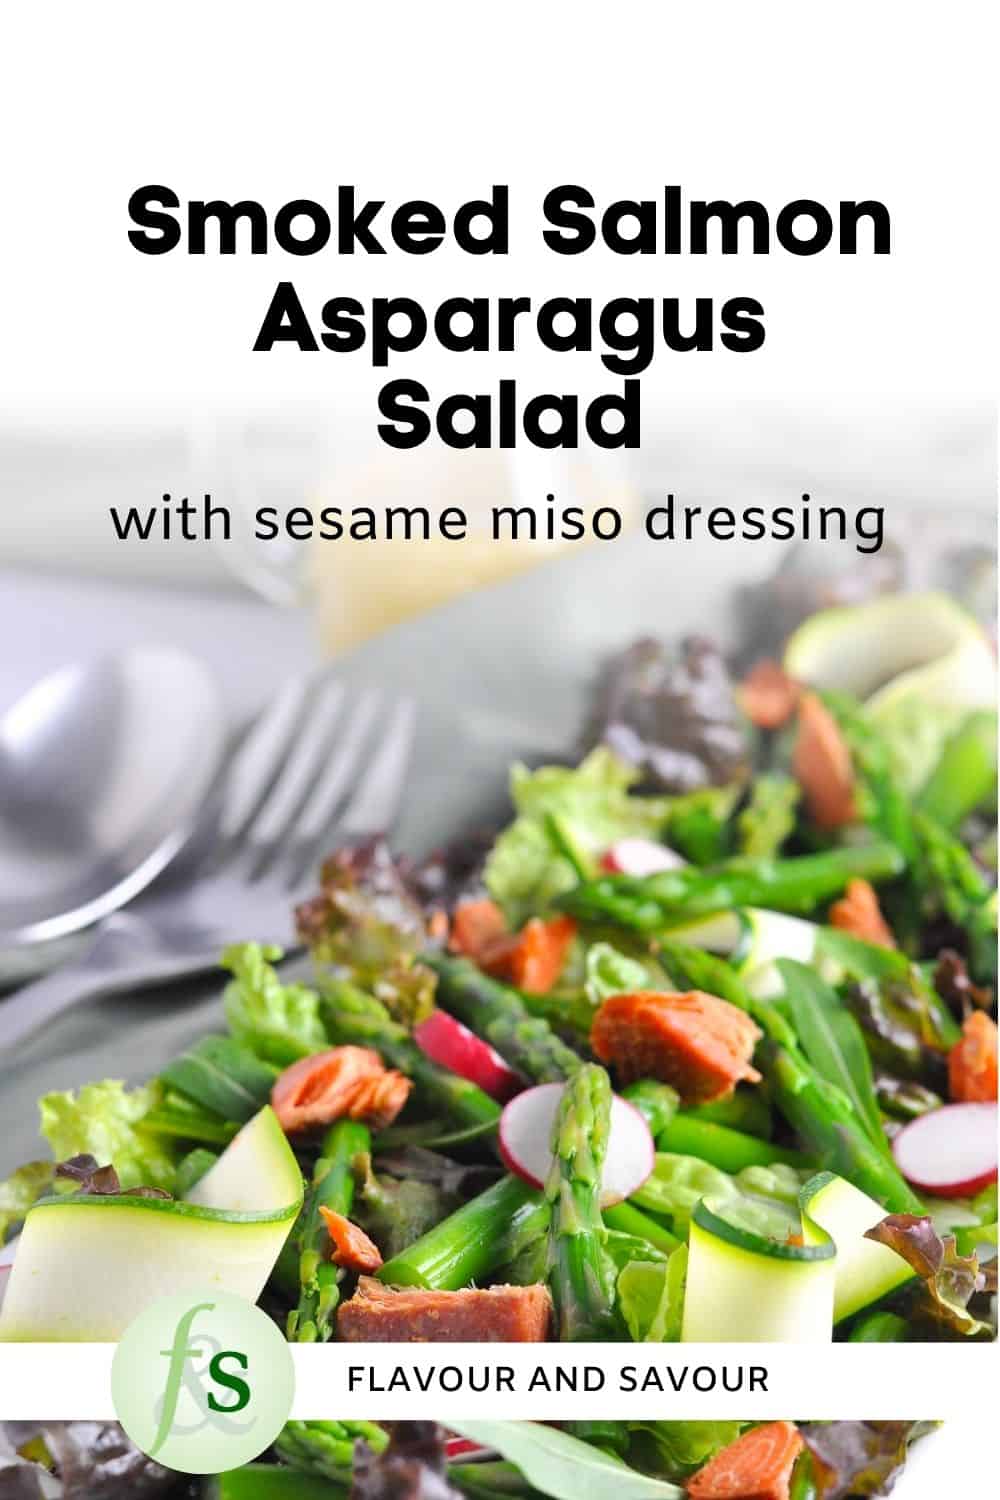 Image with text overlay for smoked salmon asparagus salad with sesame miso vinaigrette.